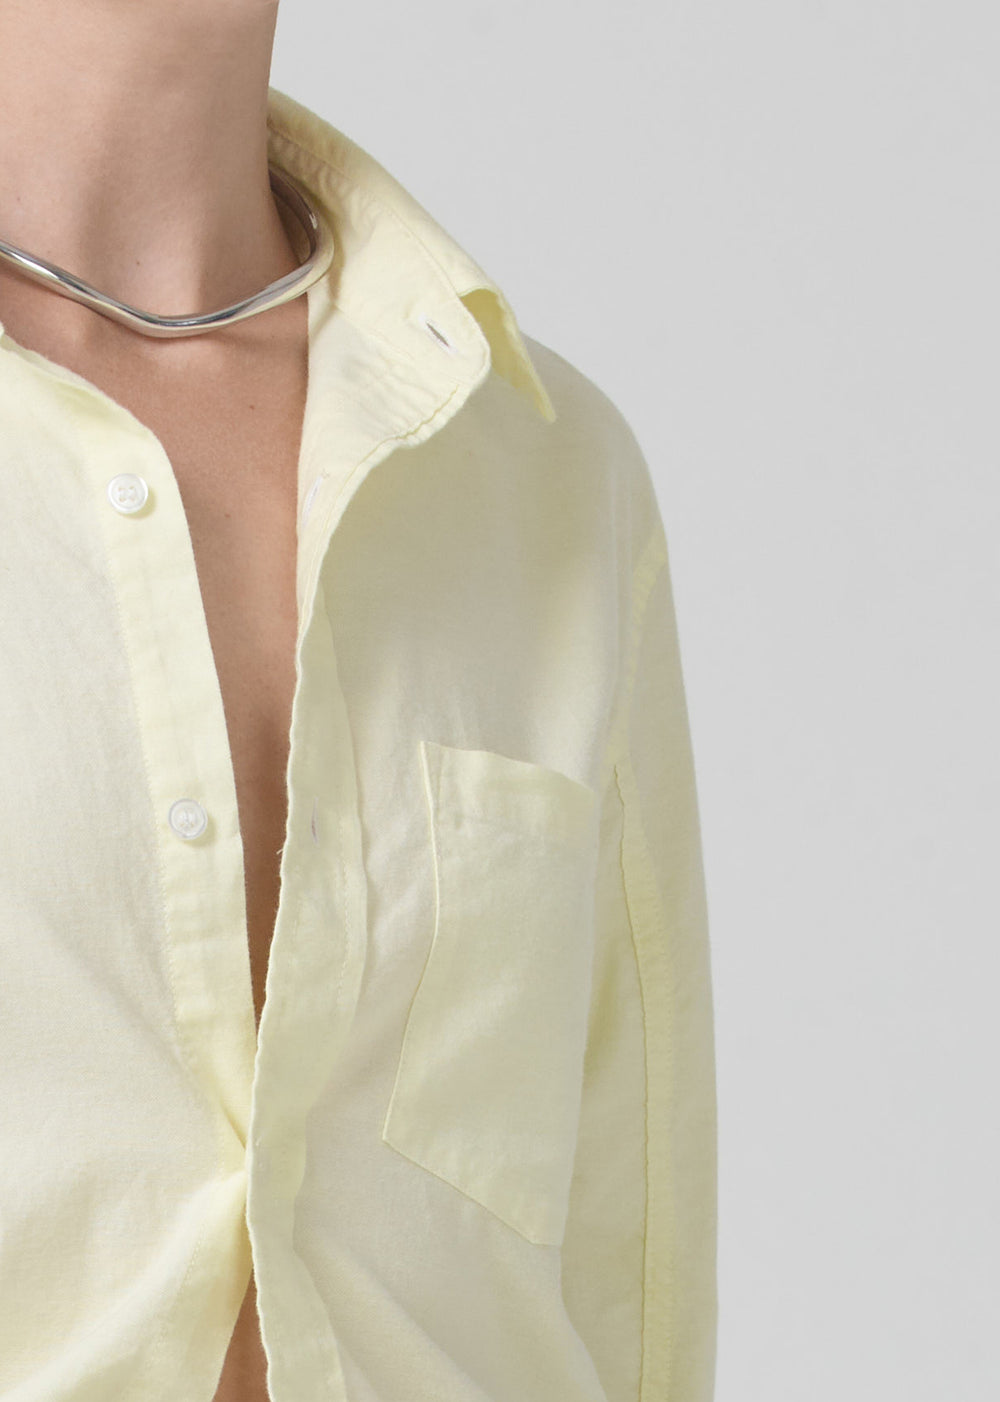 Kayla Shrunken Shirt - Oxford Baby Yellow